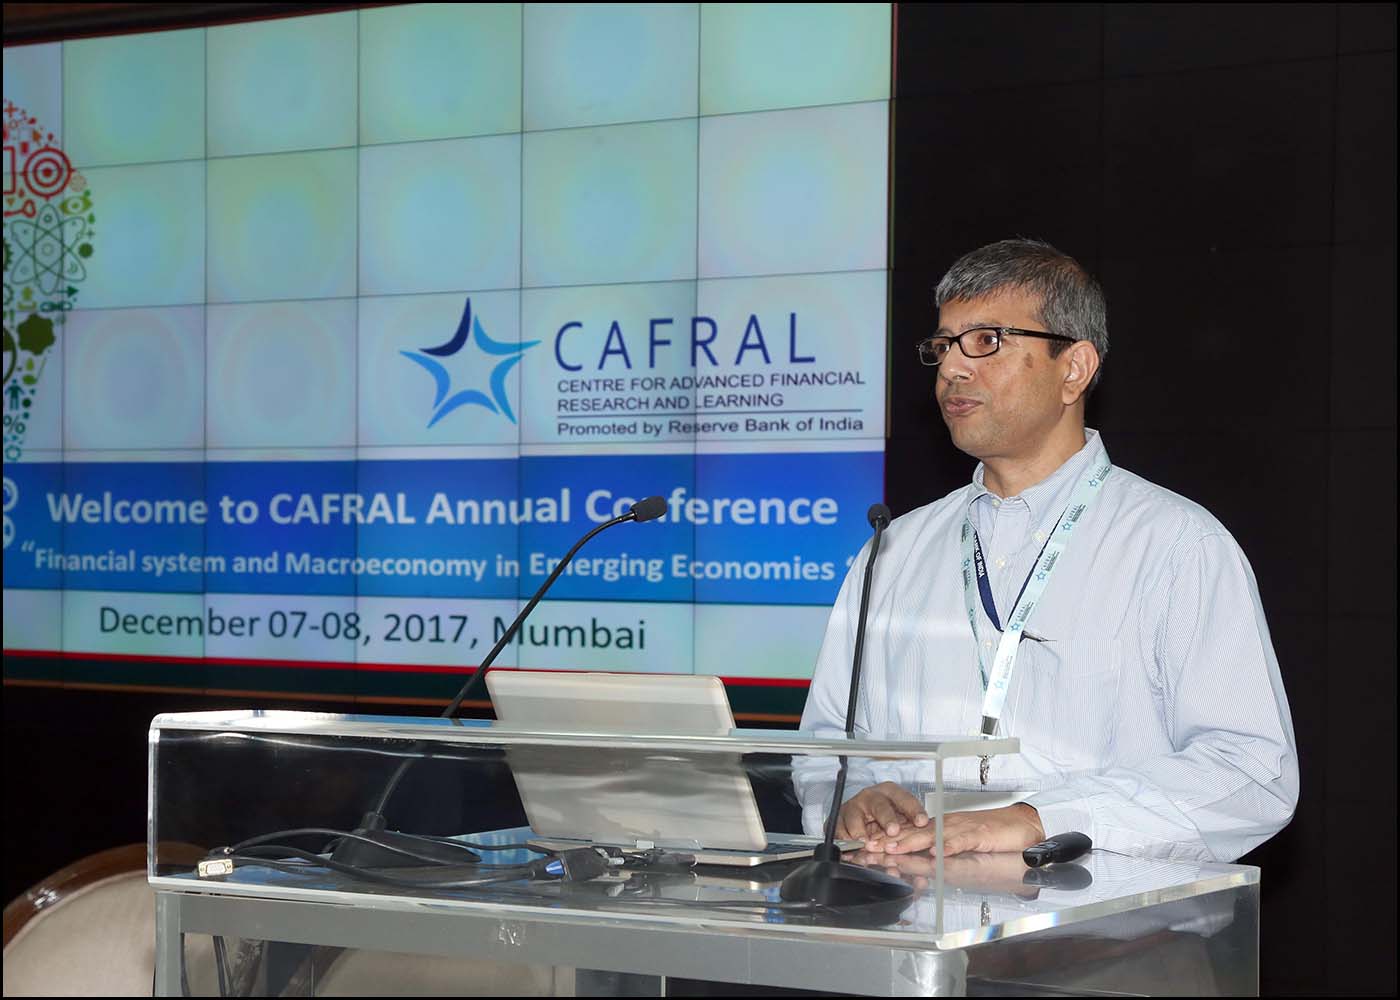 Dr. Amartya Lahiri, Director, CAFRAL